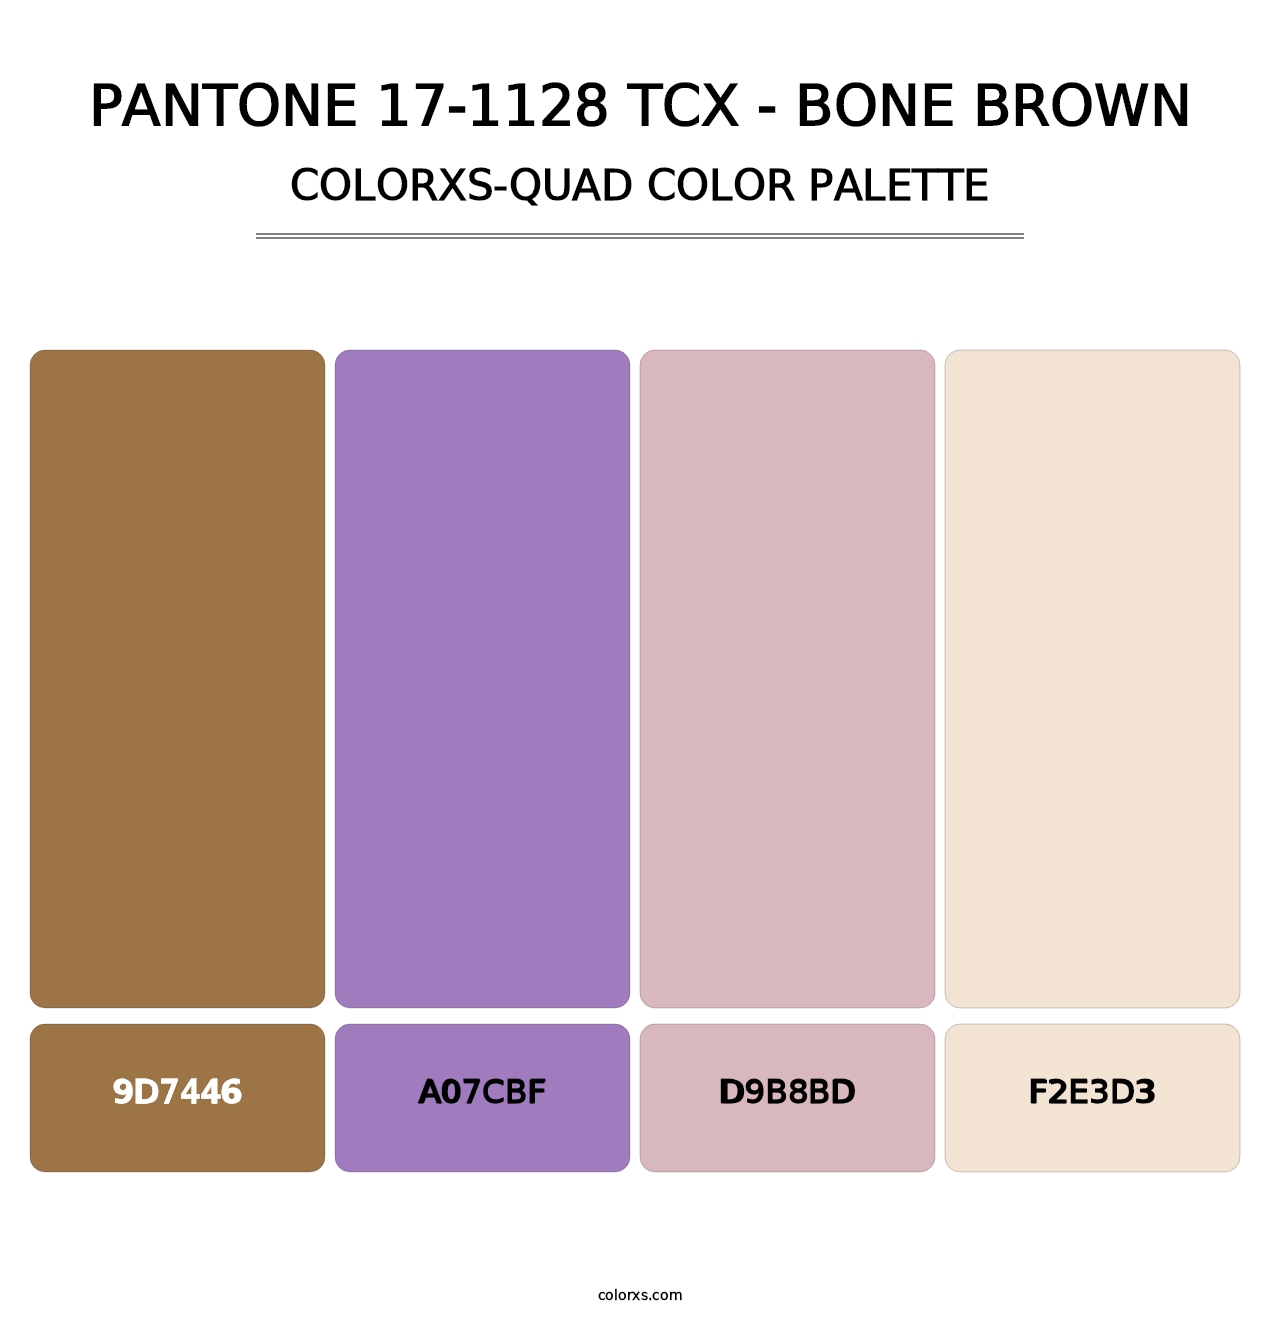 PANTONE 17-1128 TCX - Bone Brown - Colorxs Quad Palette